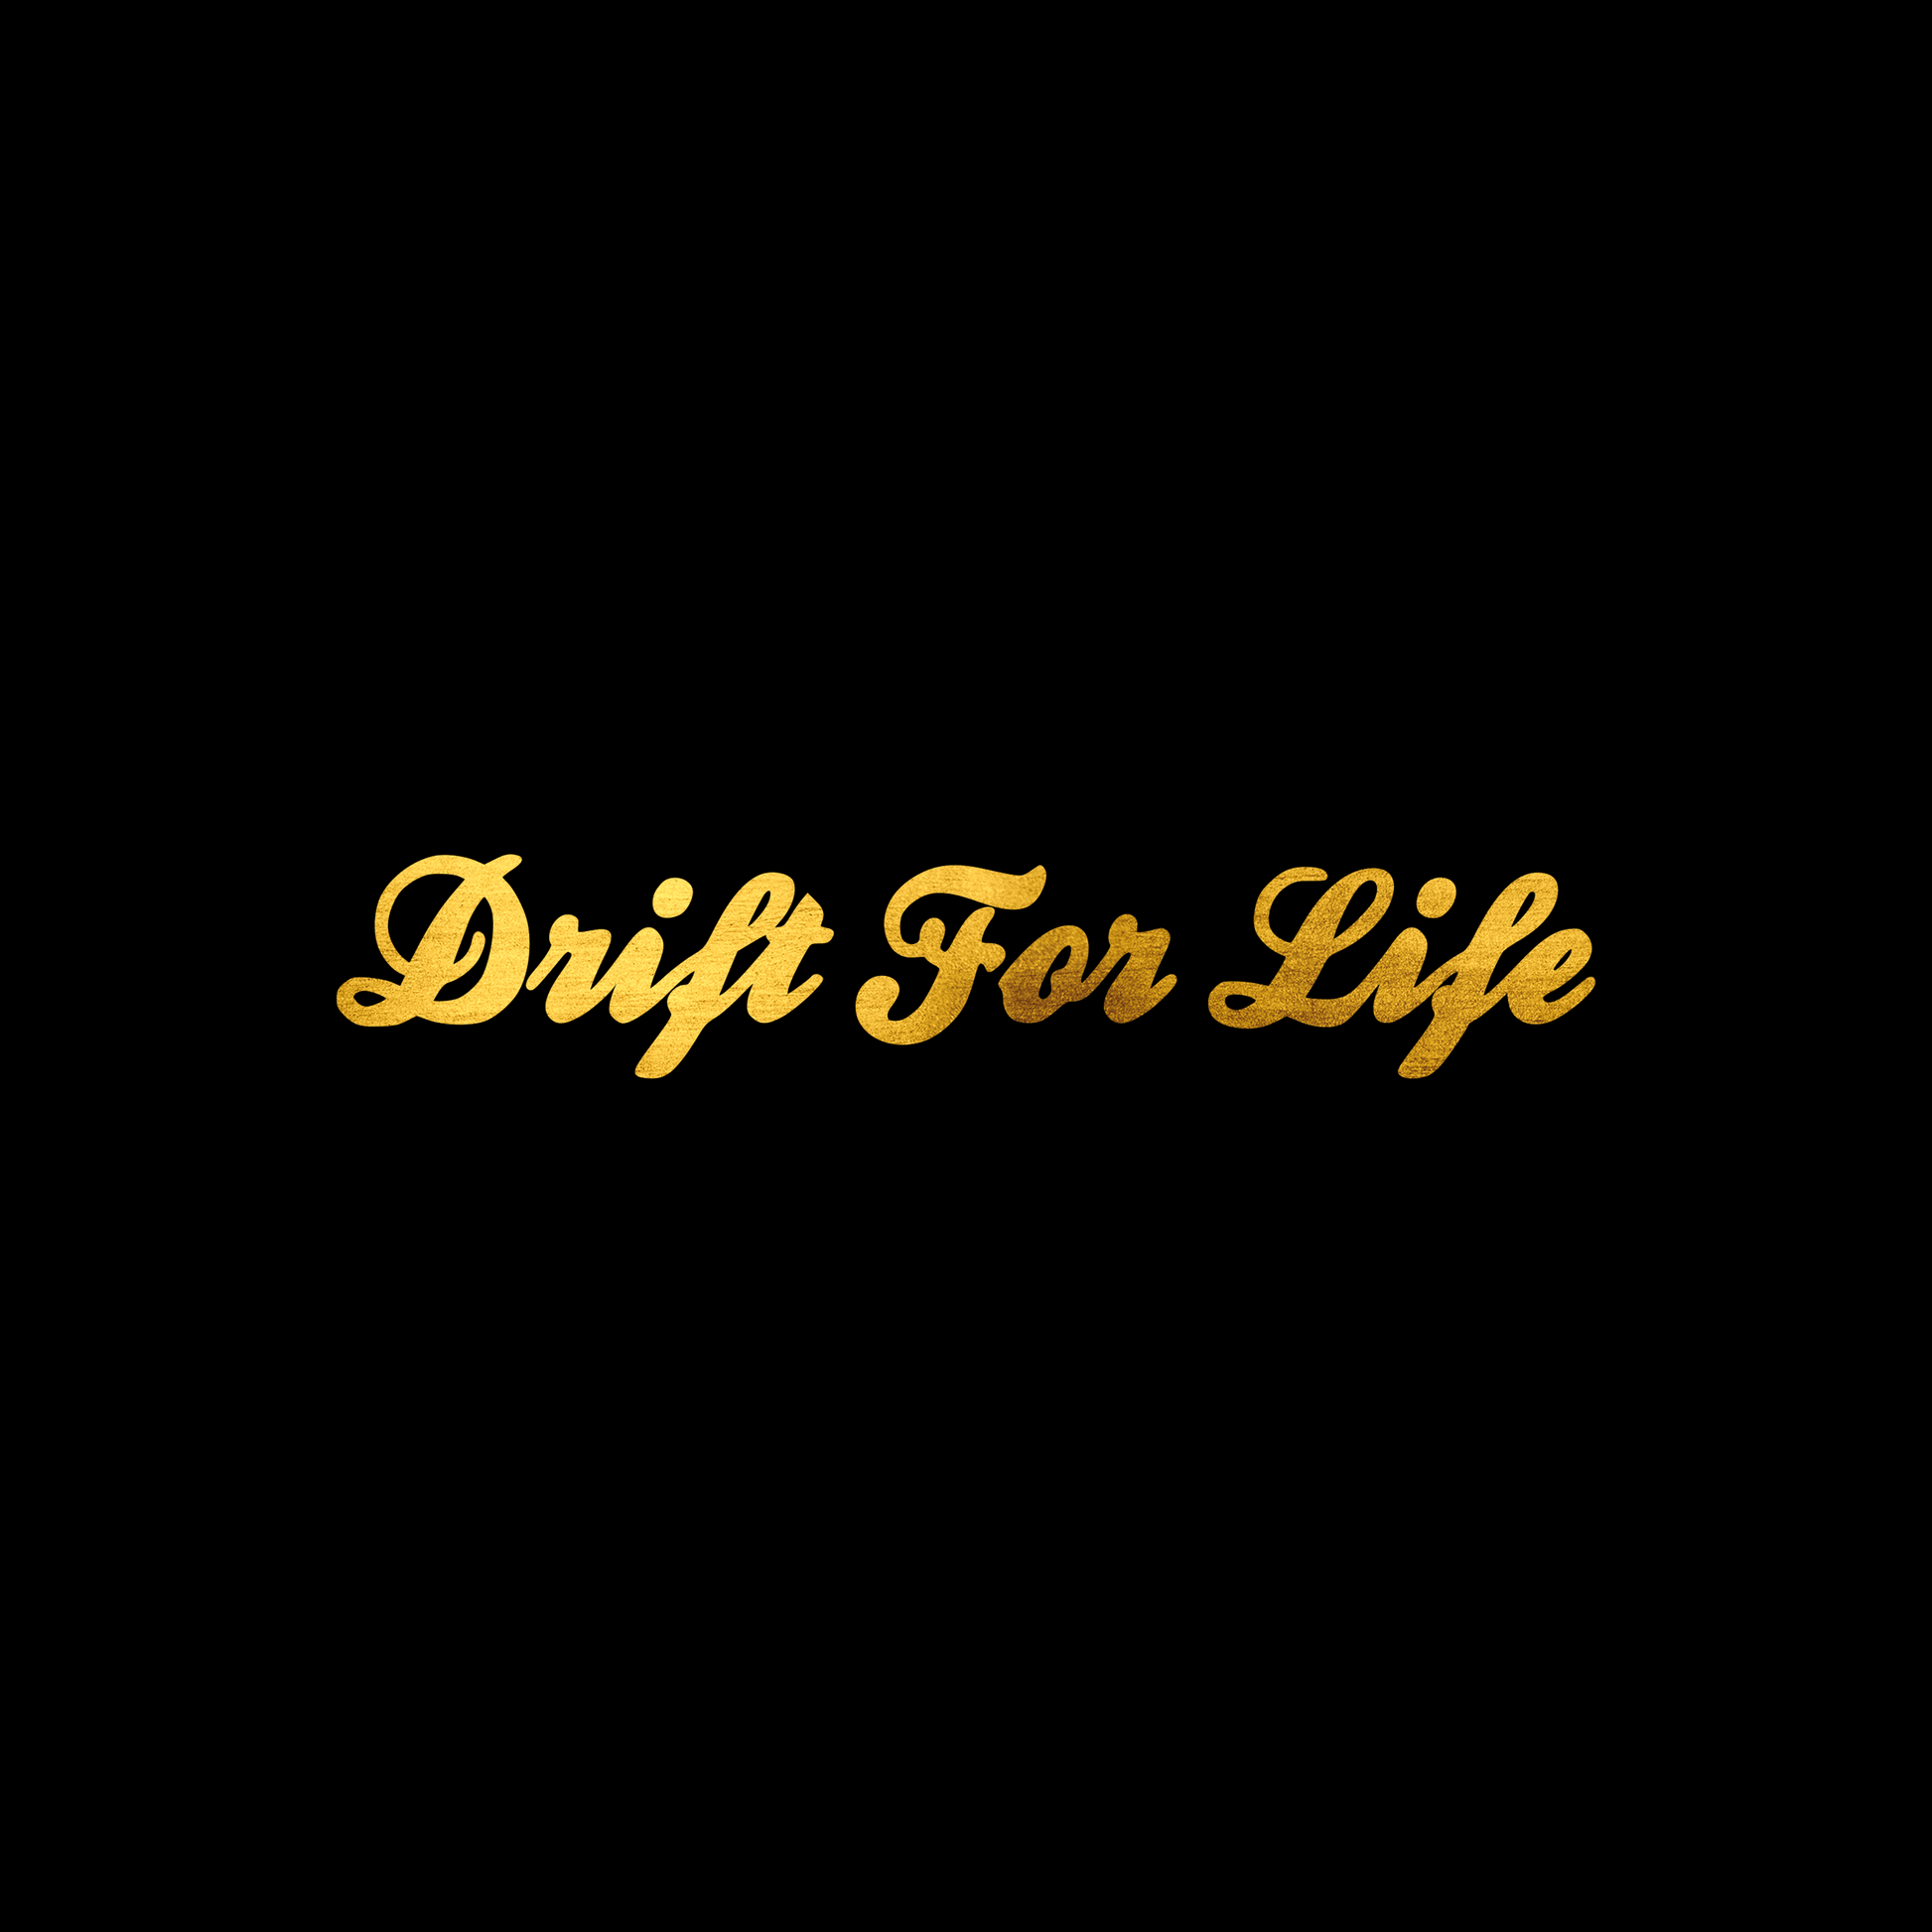  Drift for life sticker decal